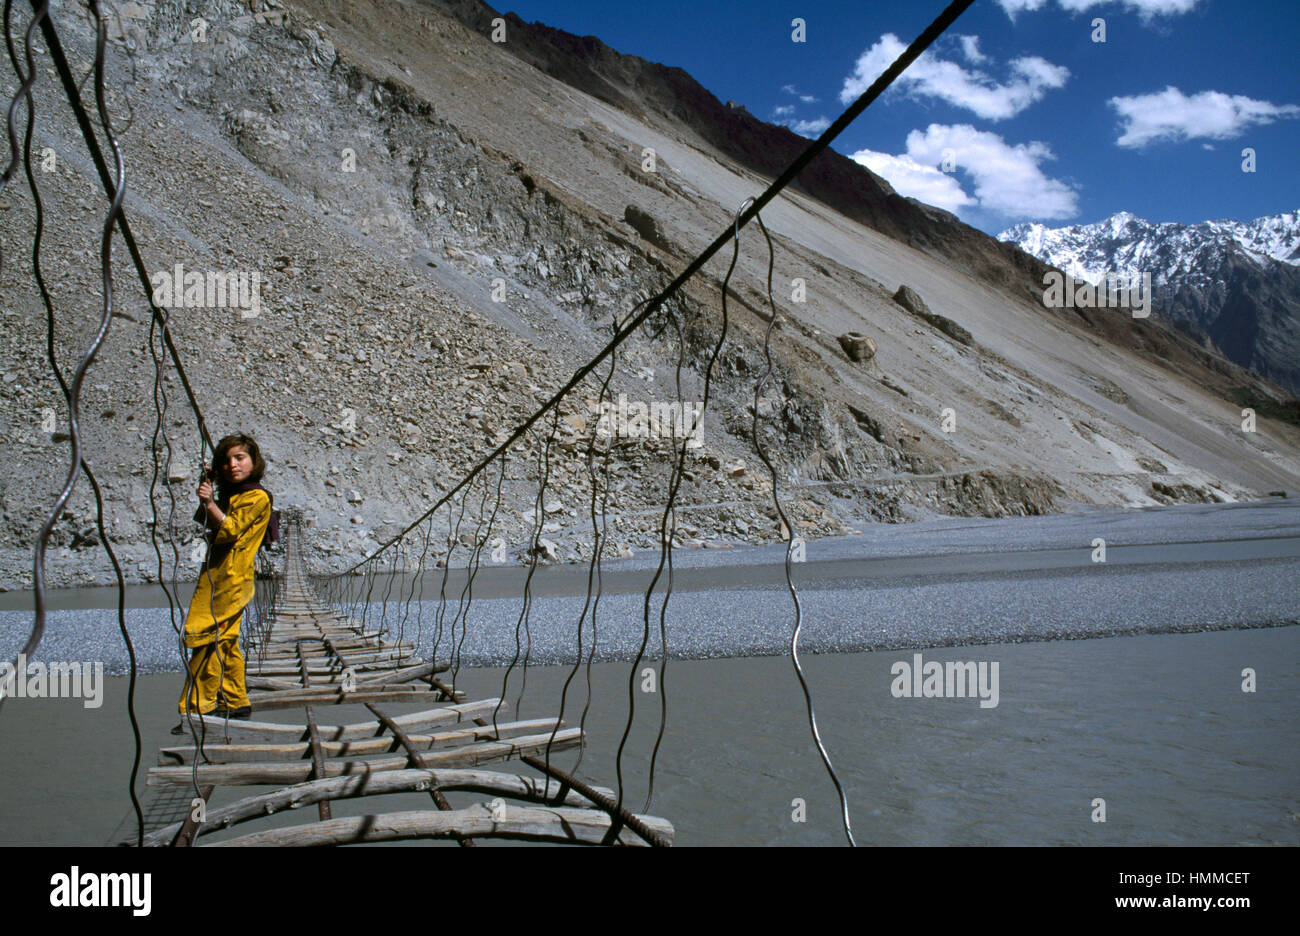 Girl On Suspension Bridge At Passu Village Upper Hunza Valley